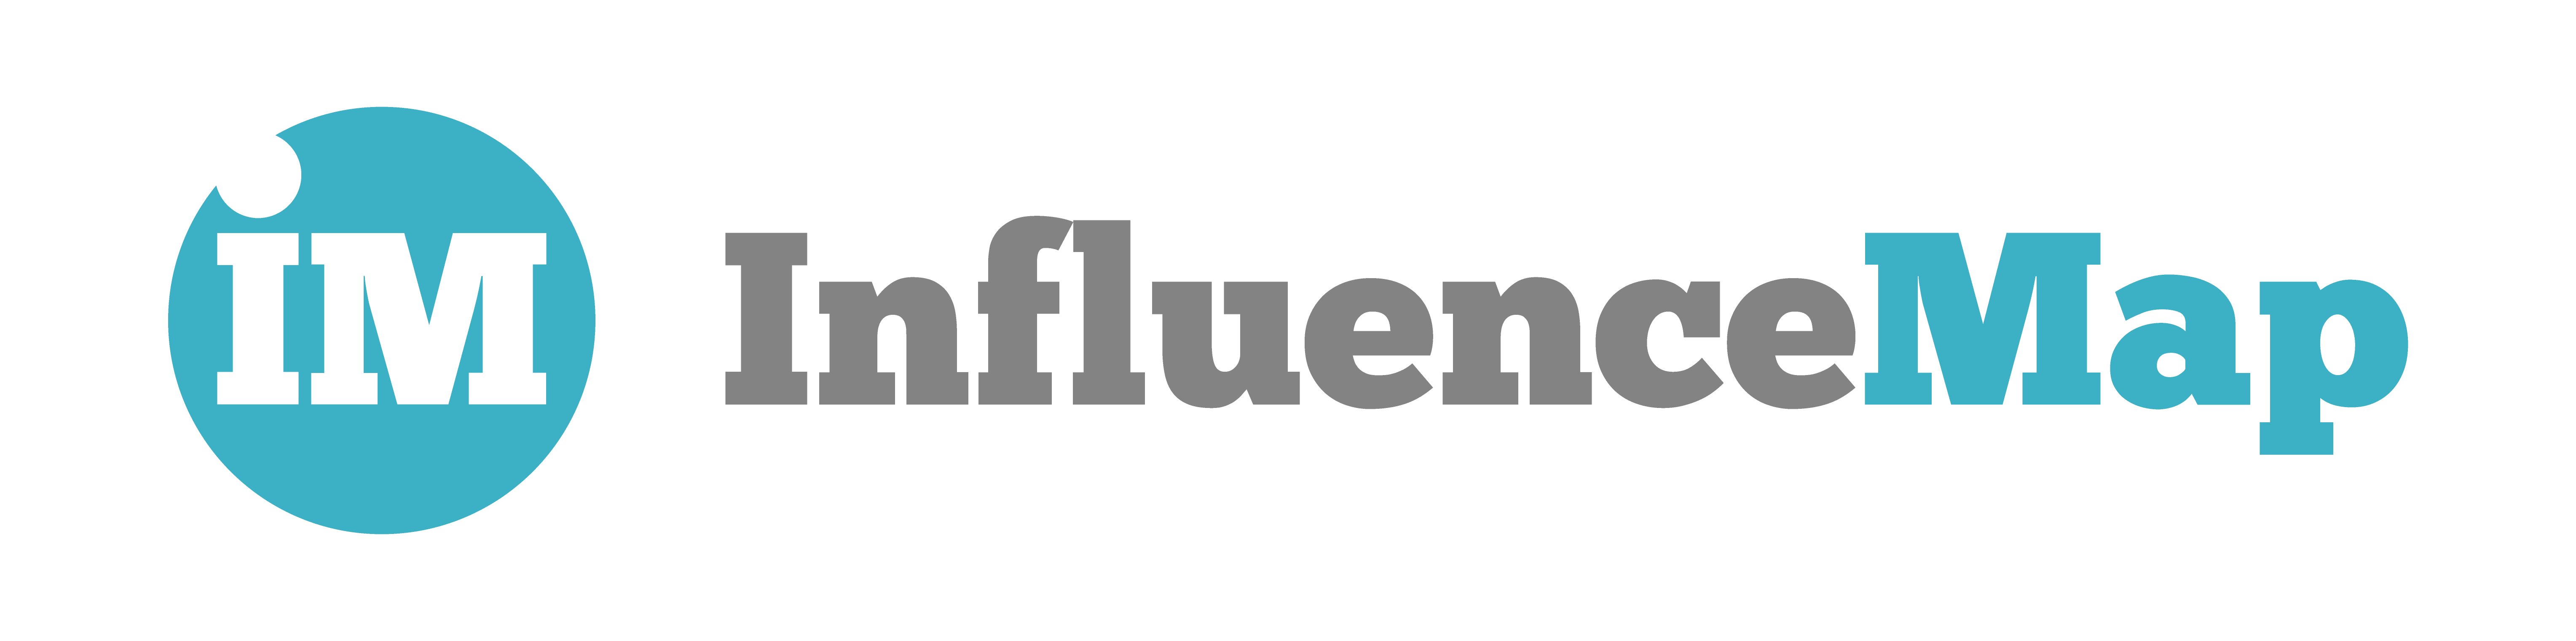 Influencemap Logo PNG